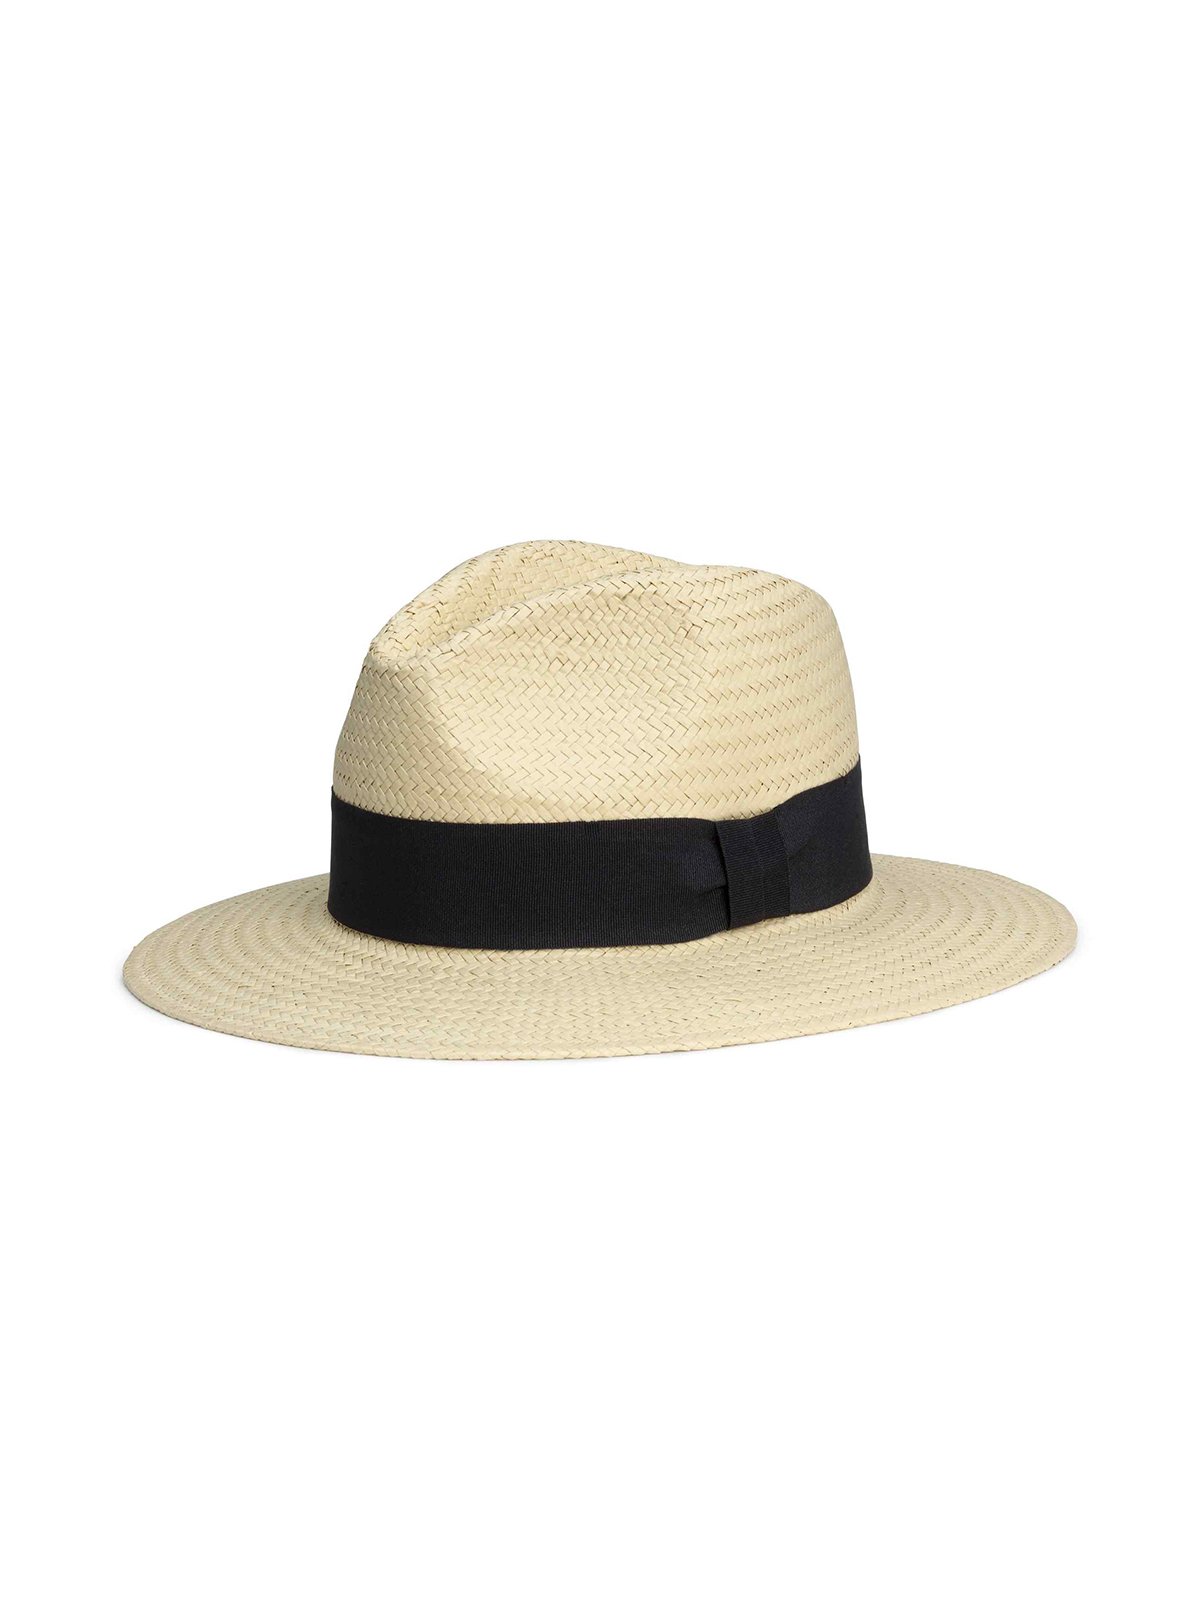 H hat. Шляпа HM женская. Шляпа h m. Бежевая шляпа. Шляпа HM женская бежевая.